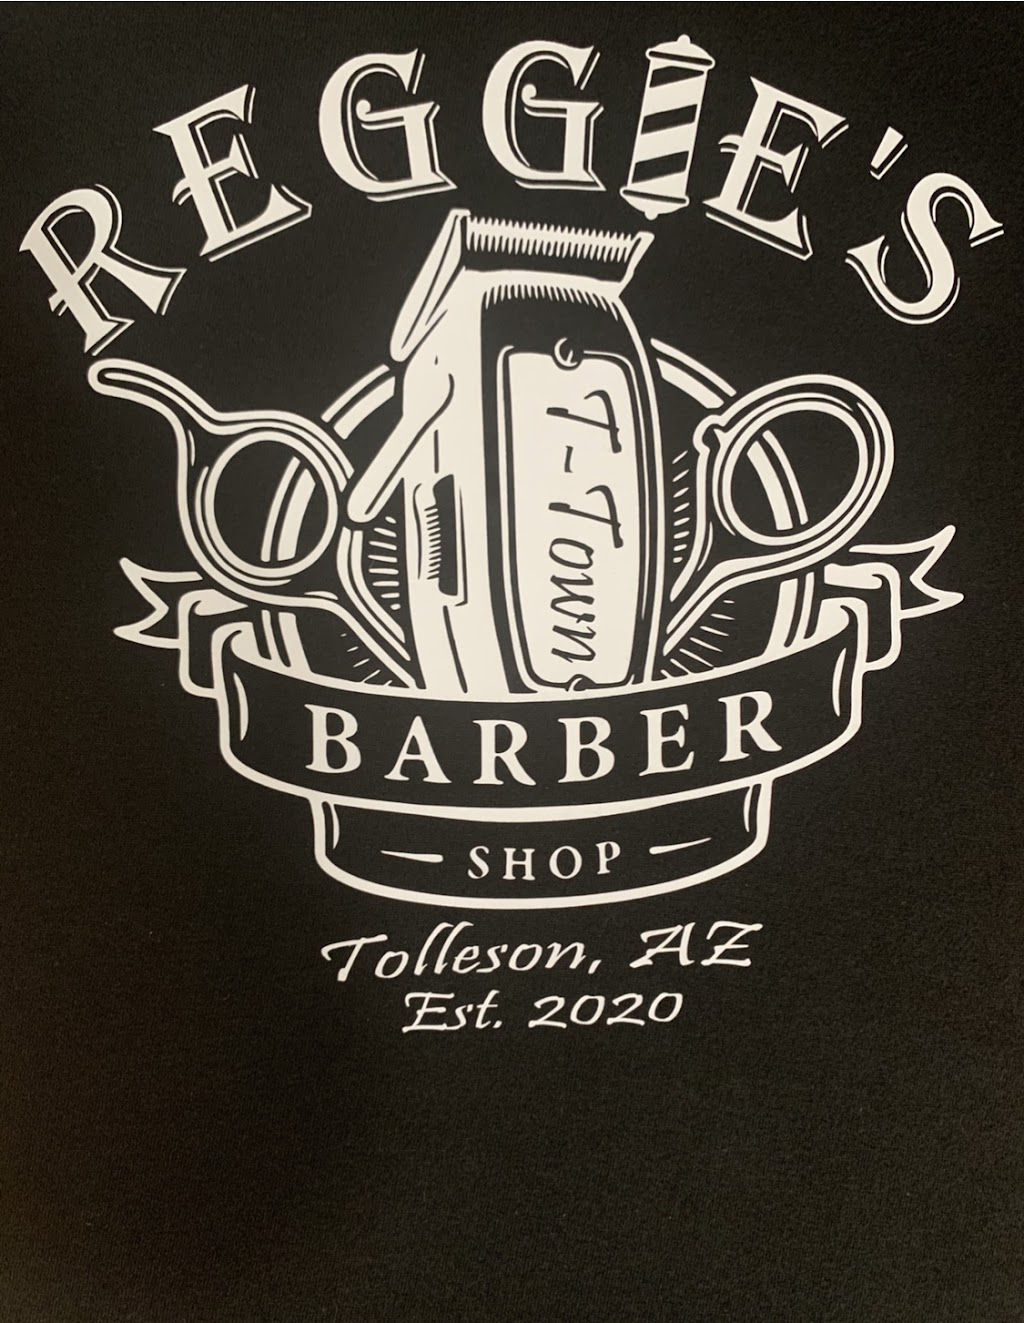 Reggies T-Town Barber Shop | 9550 W Van Buren St Suite #9, Tolleson, AZ 85353, USA | Phone: (623) 936-7015